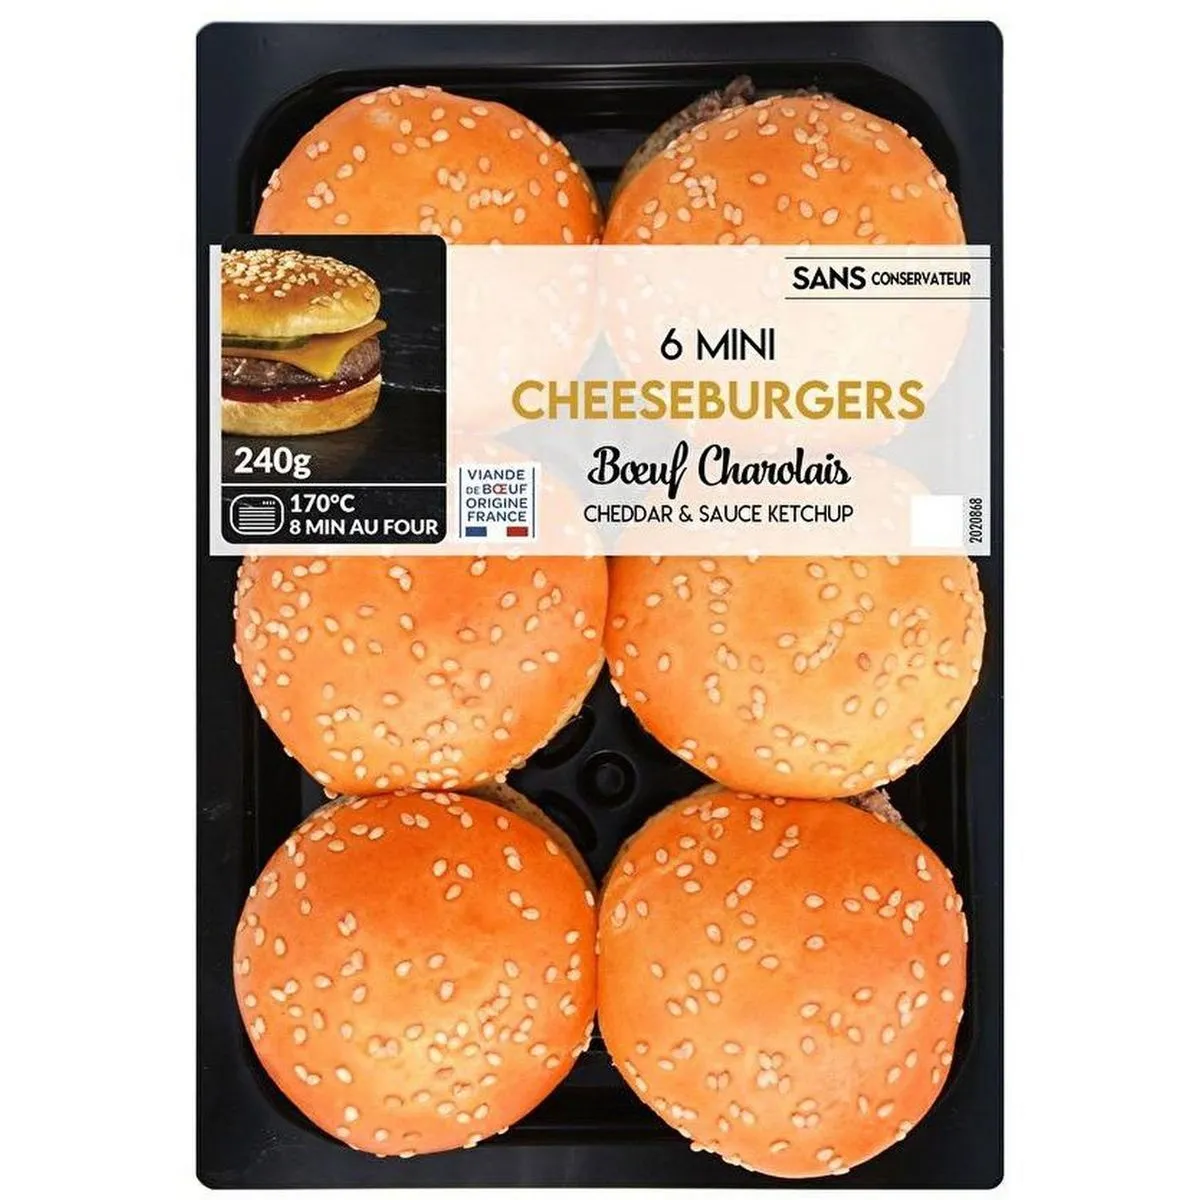 6 mini  cheeseburgers